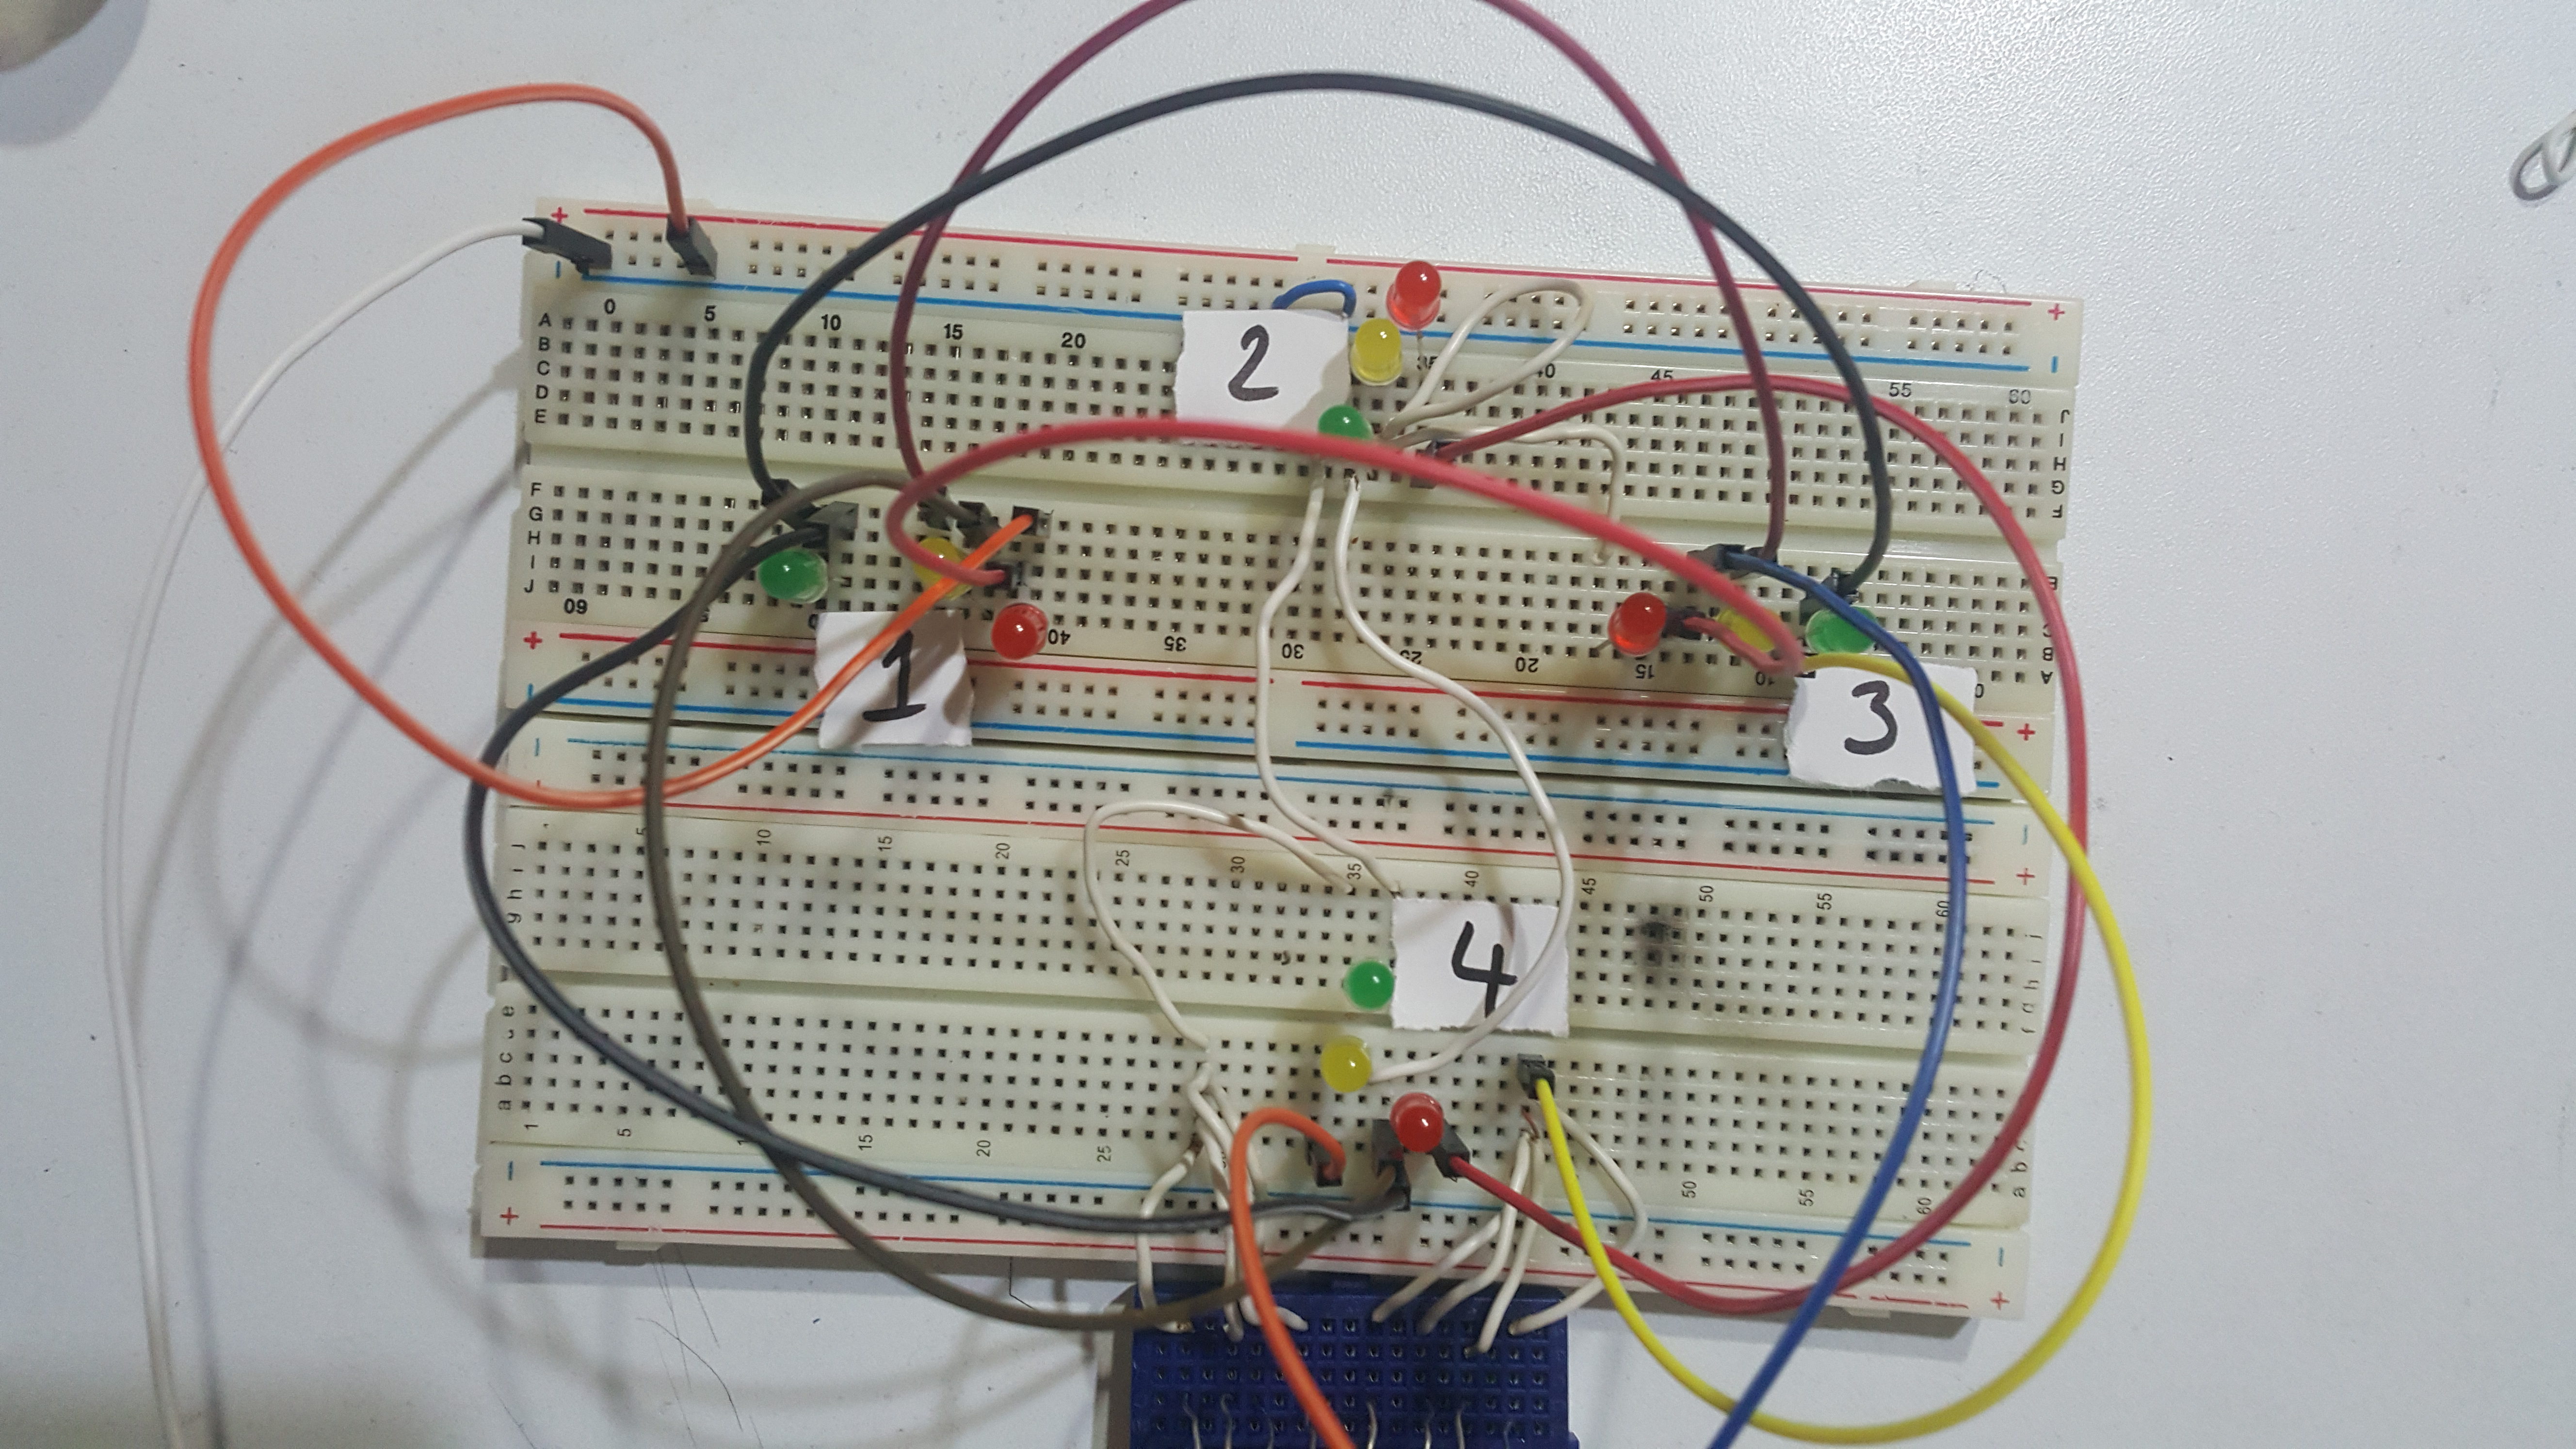 Four Way Traffic Lights Circuit using 555 Timer IC - Proje ...